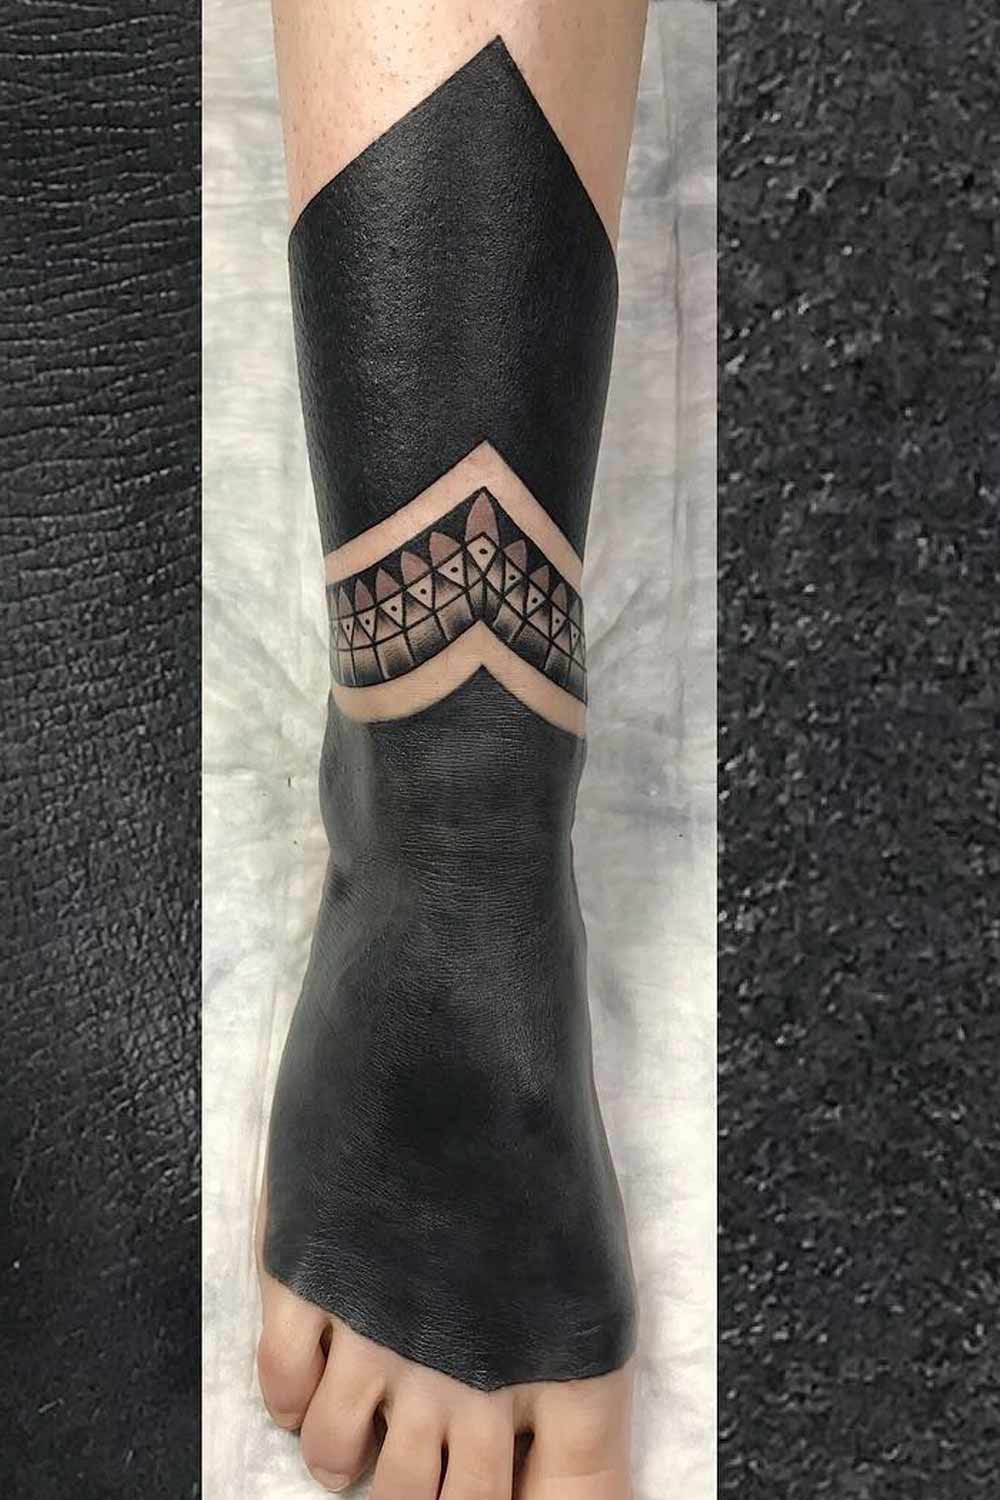 Leg Blackout Tattoo Design